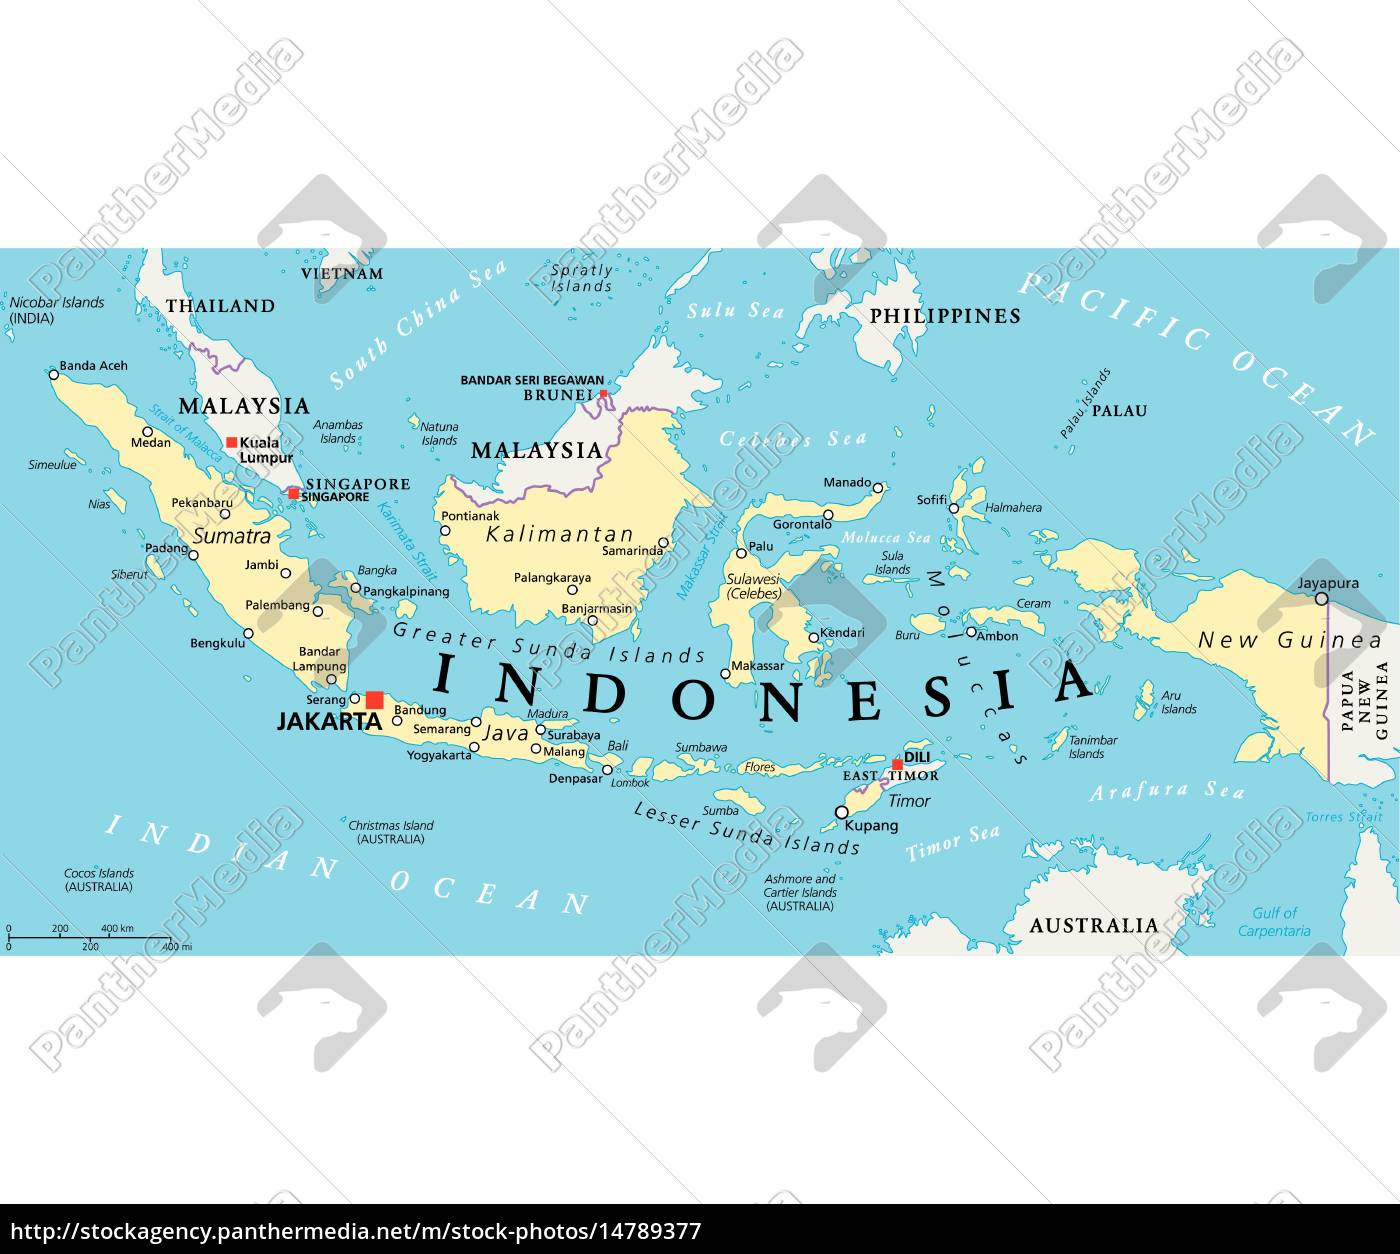 indonesien politische karte - Lizenzfreies Bild - #14789377